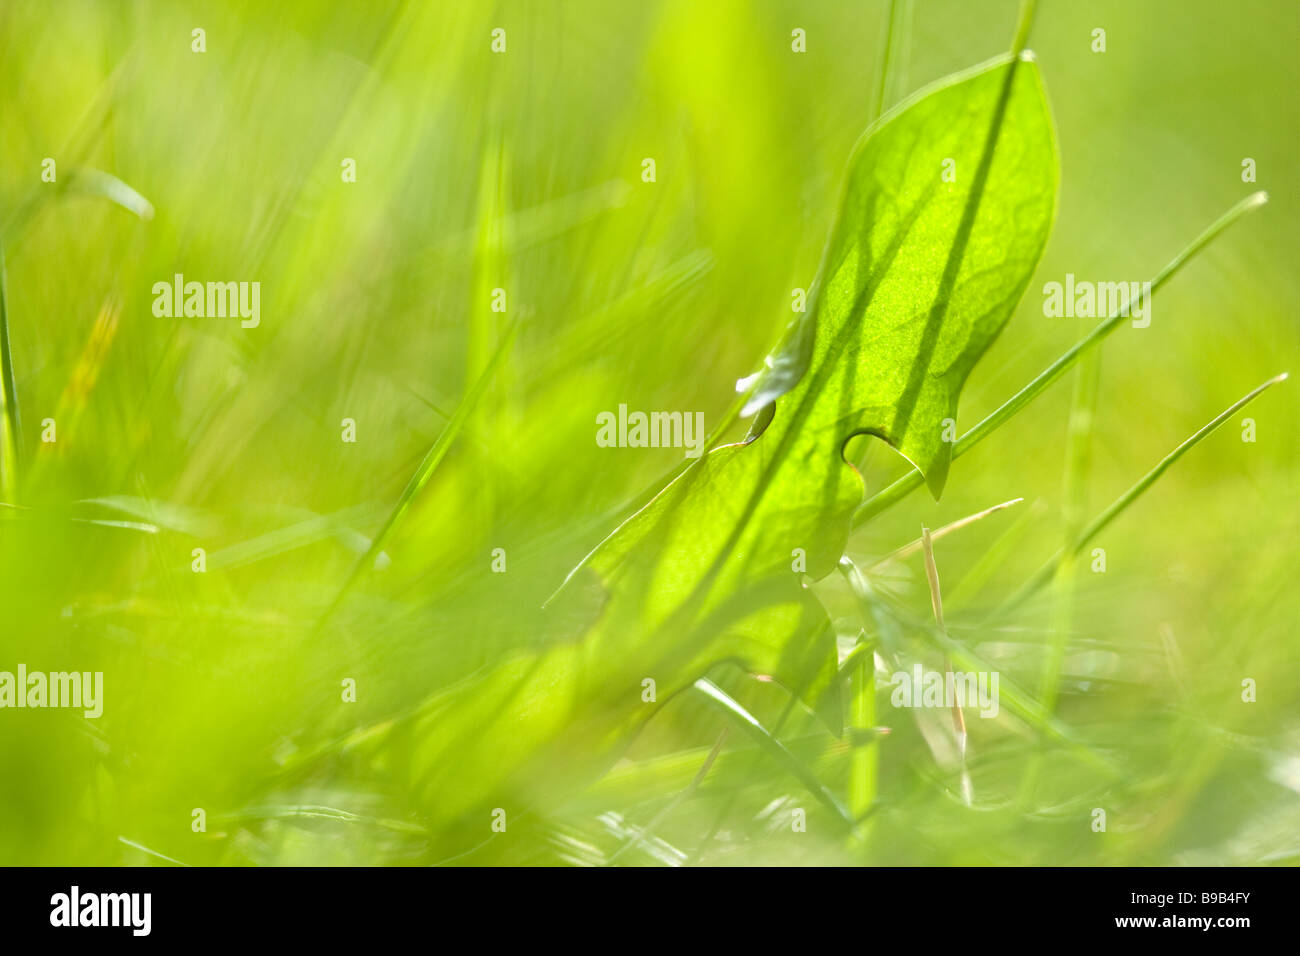 close up of summer grass dept of field Stock Photo